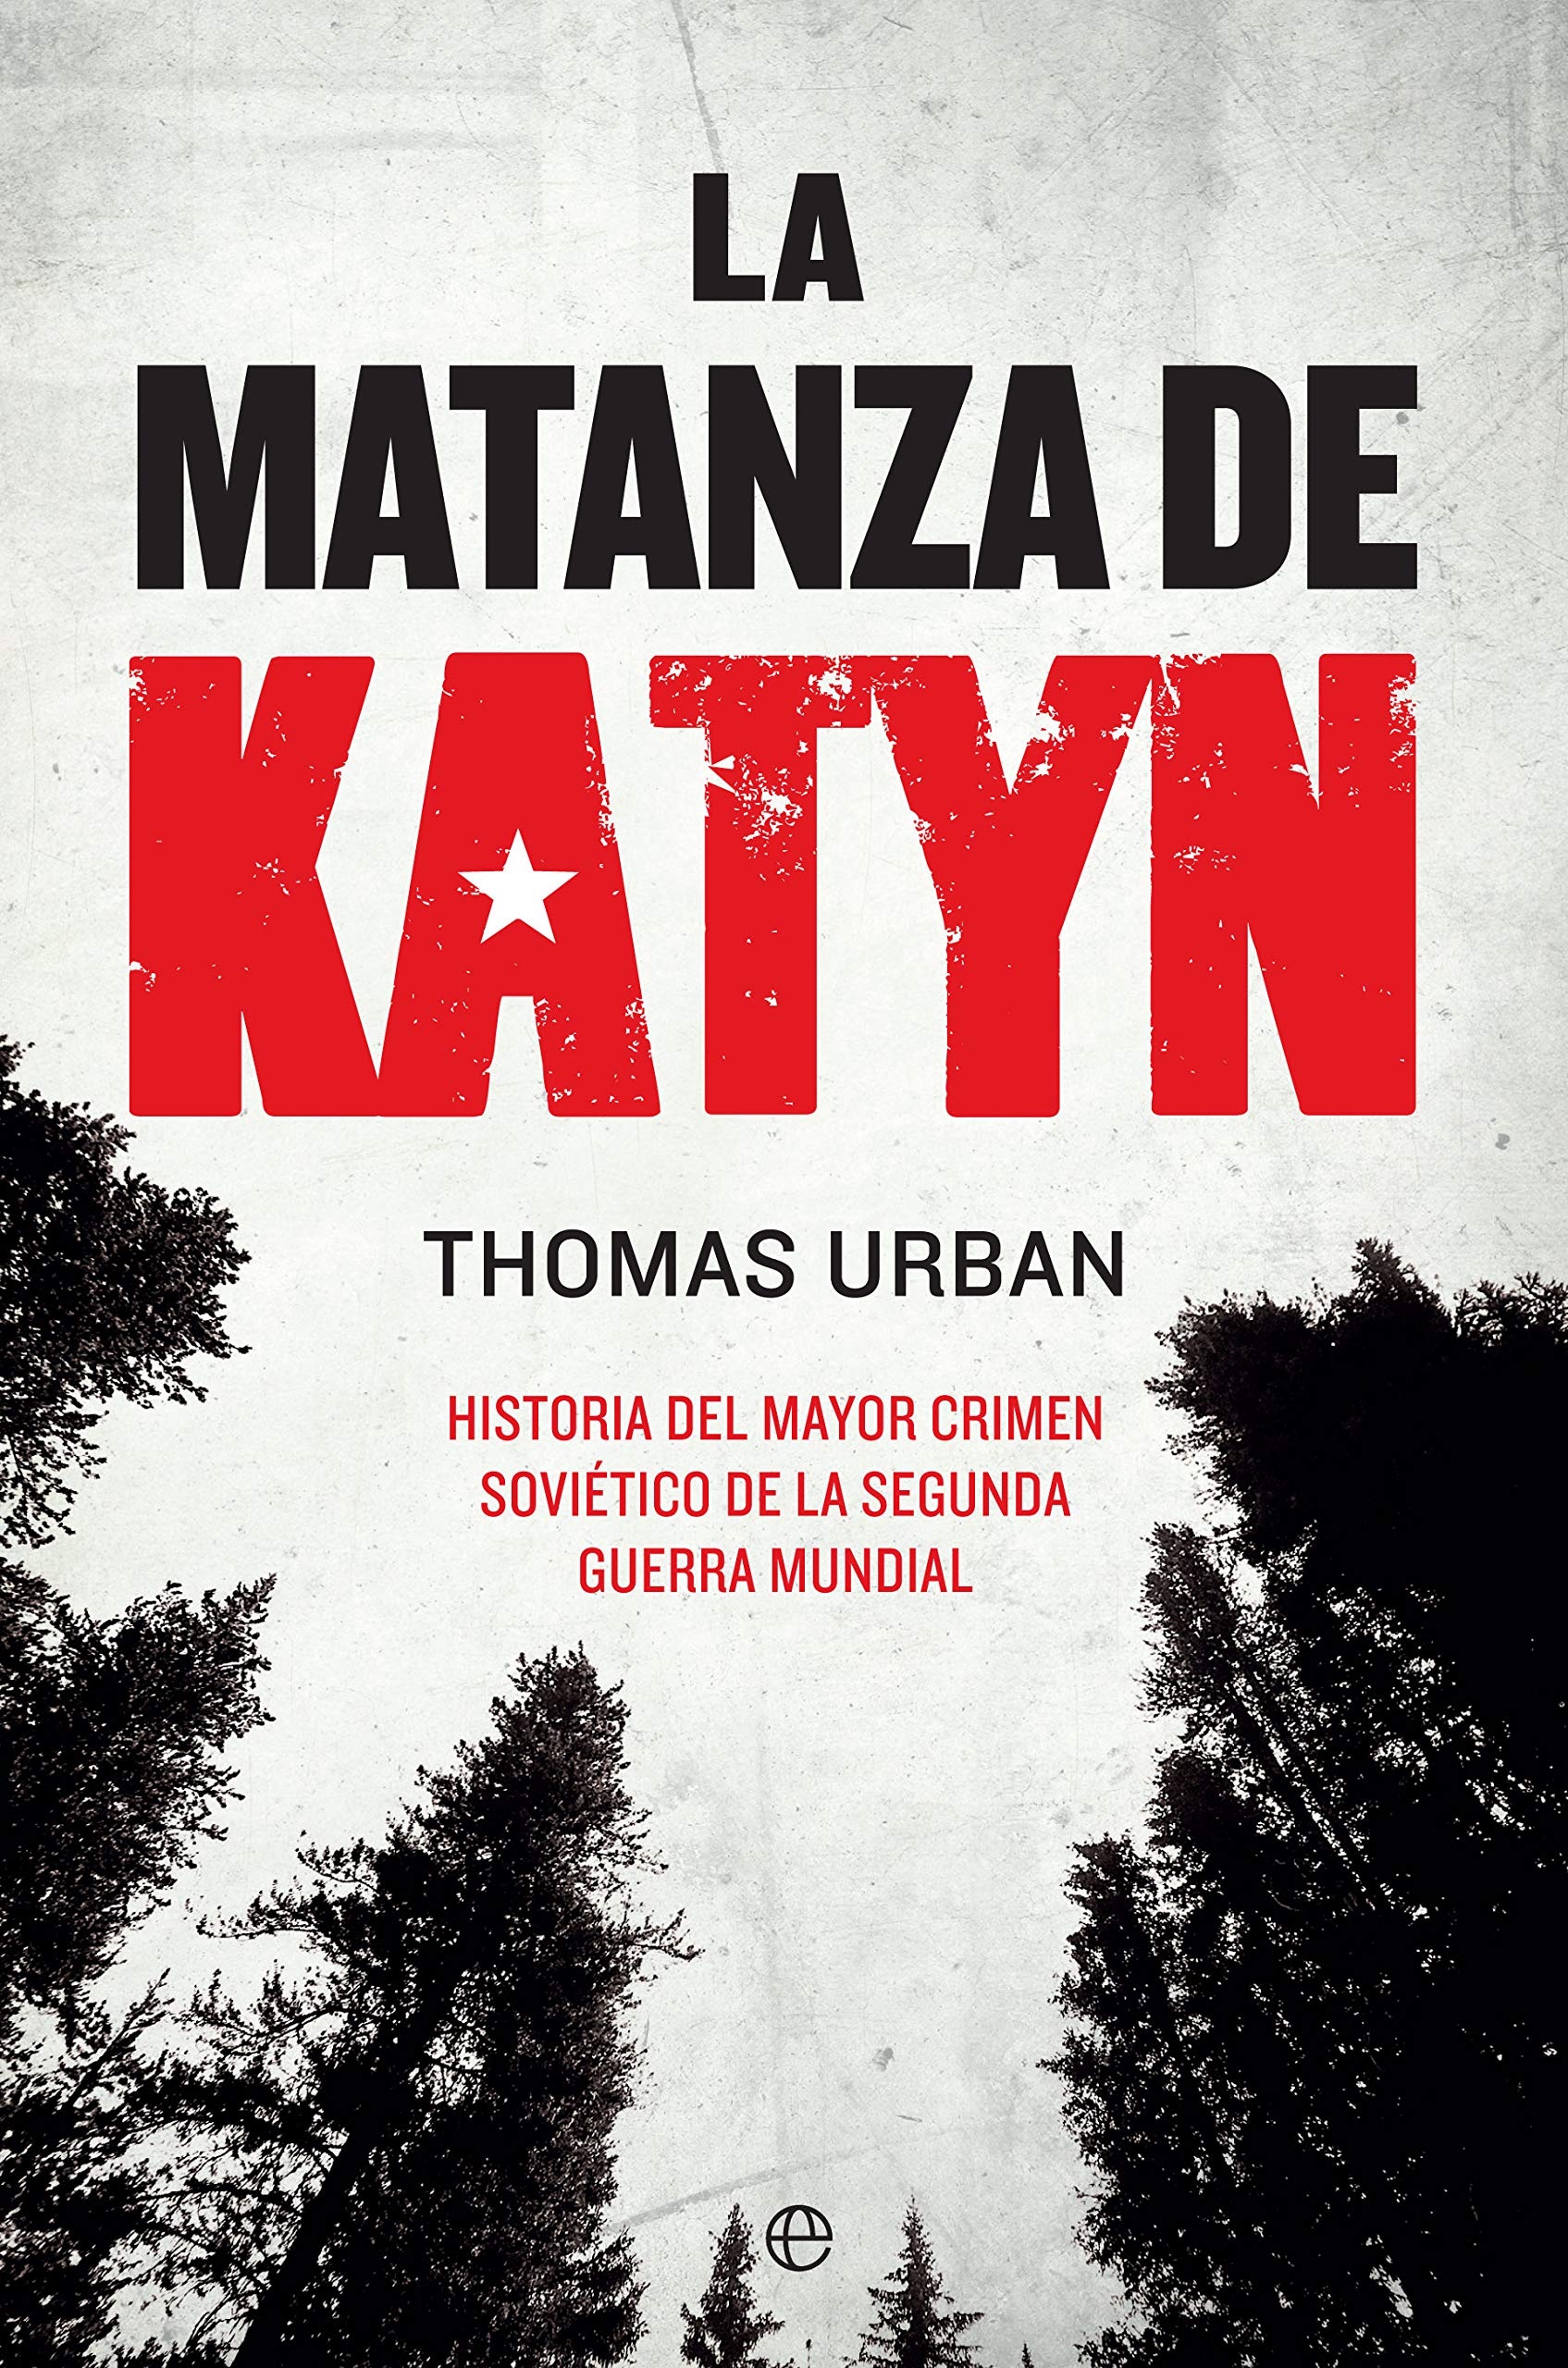 Zenda recomienda: La matanza de Katyn, de Thomas Urban